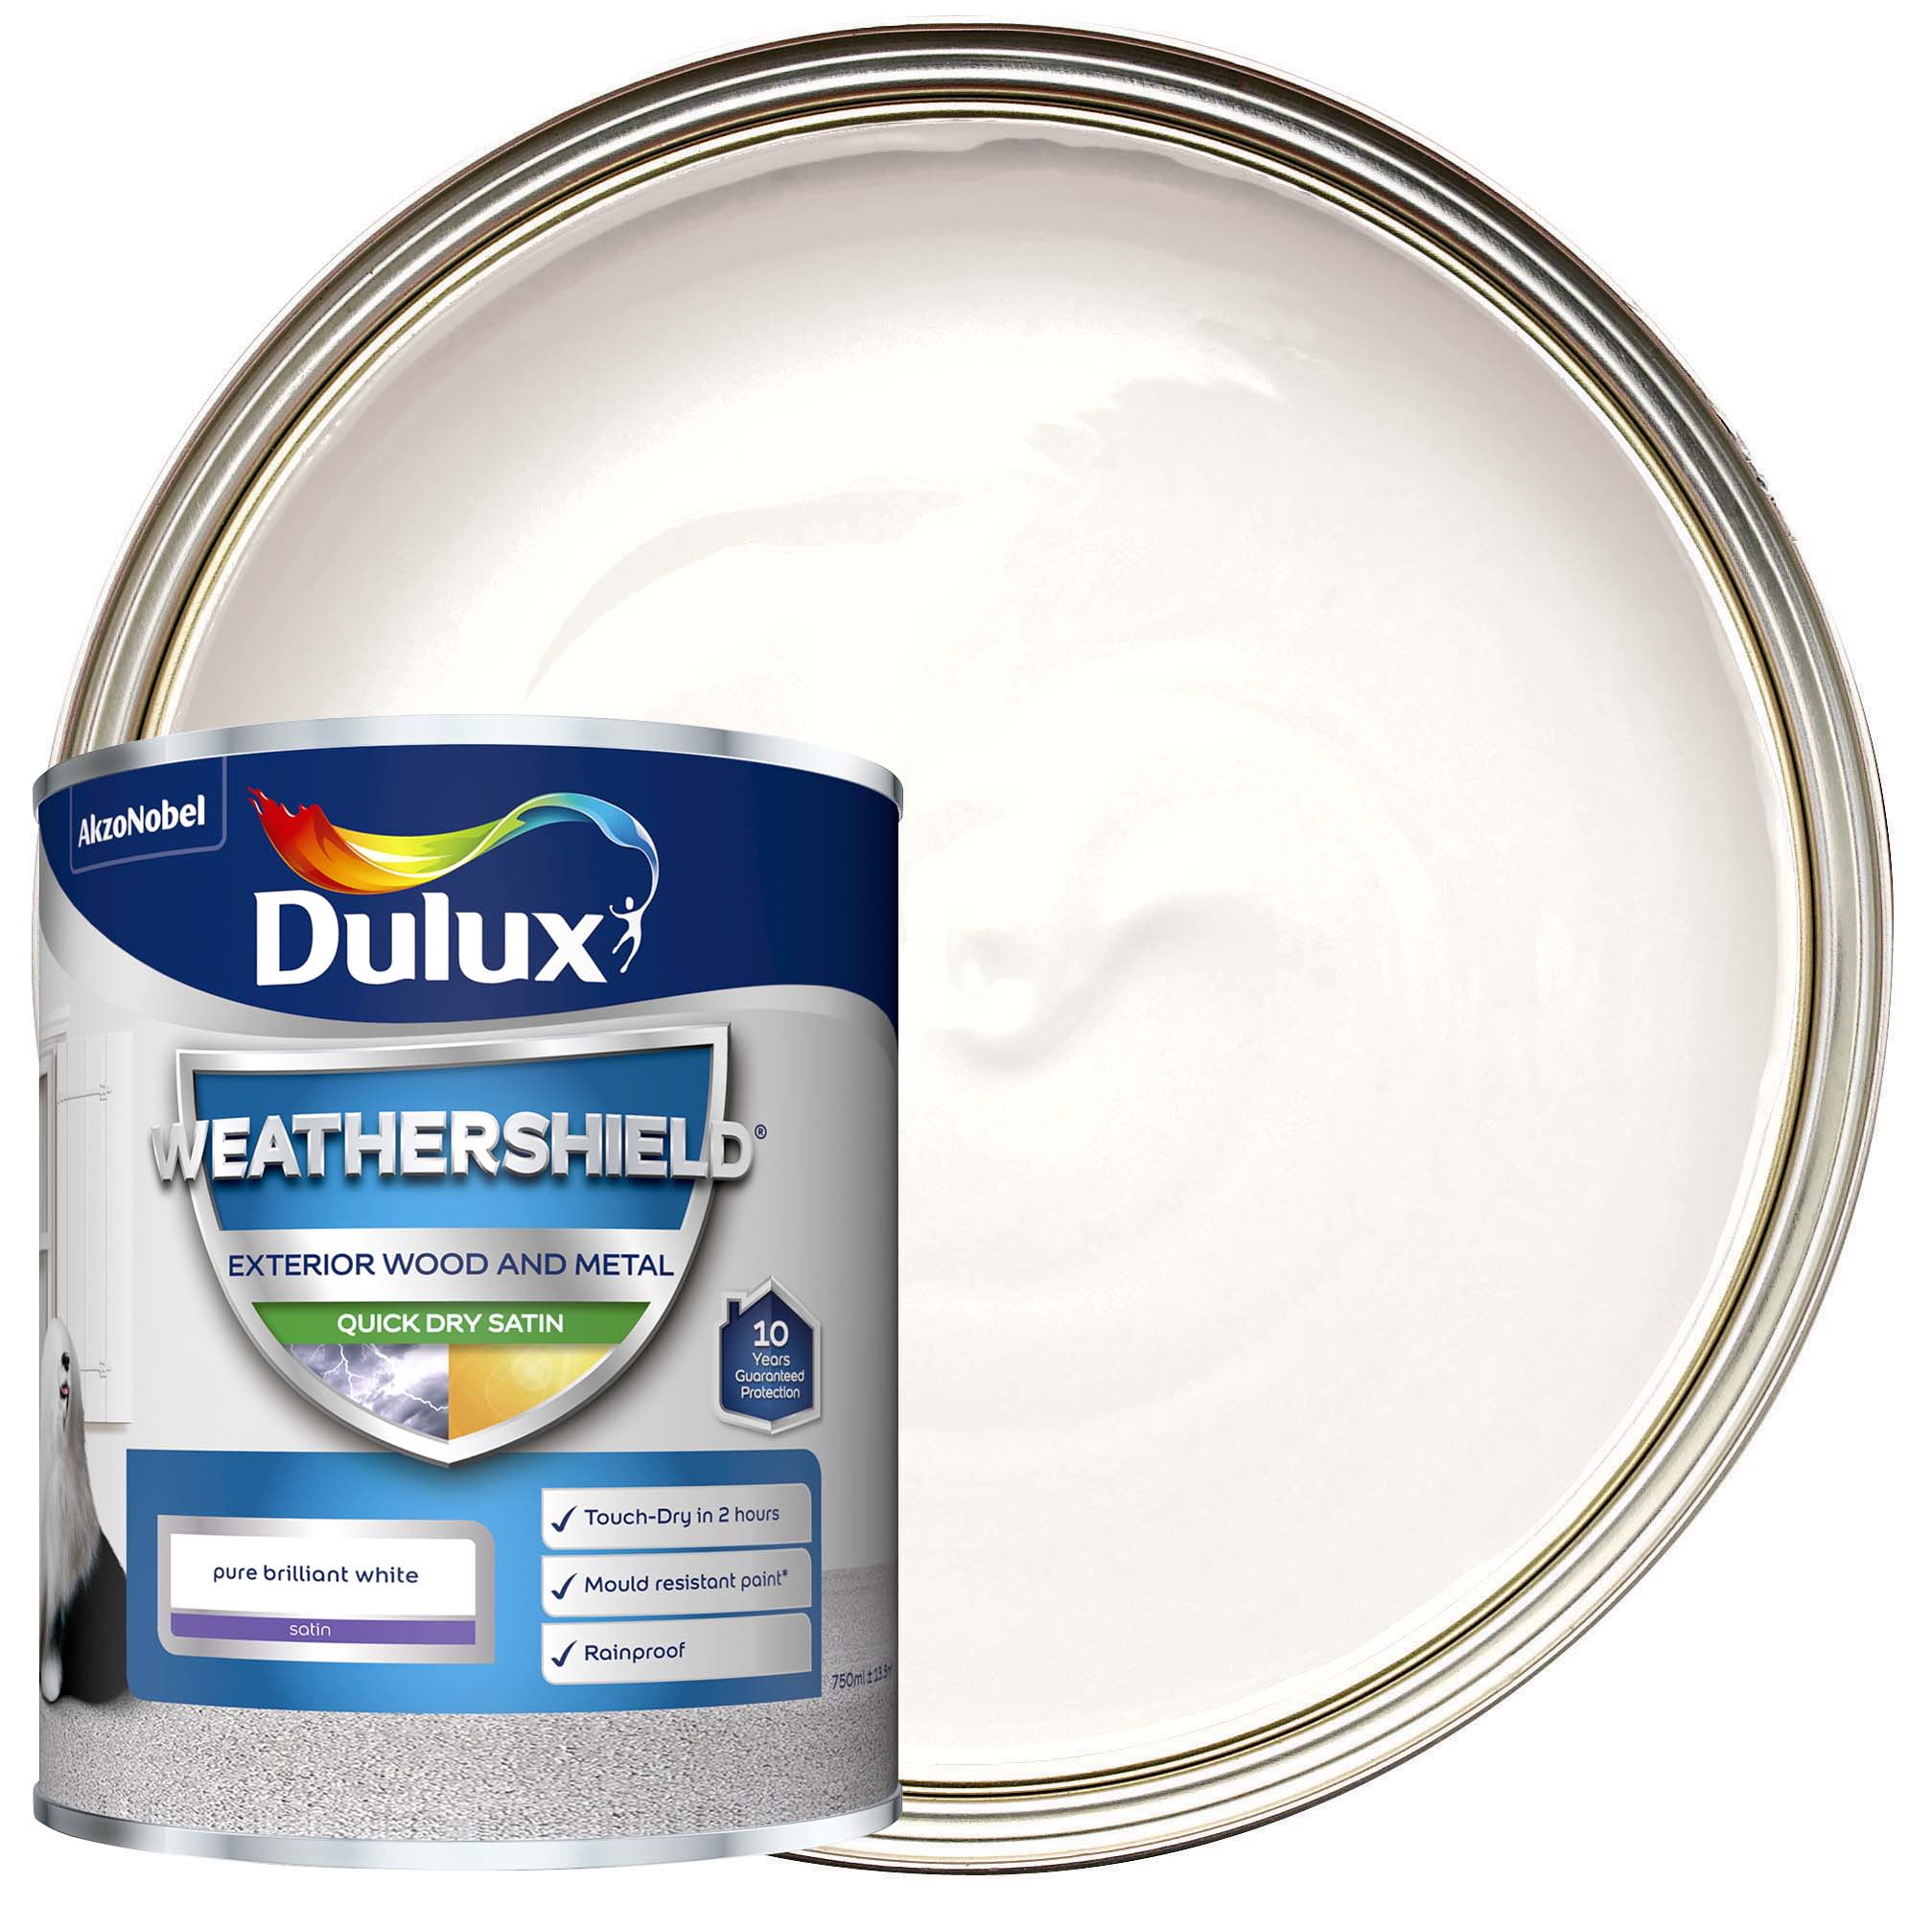 Dulux Weathershield Quick Dry Satin Paint - Pure